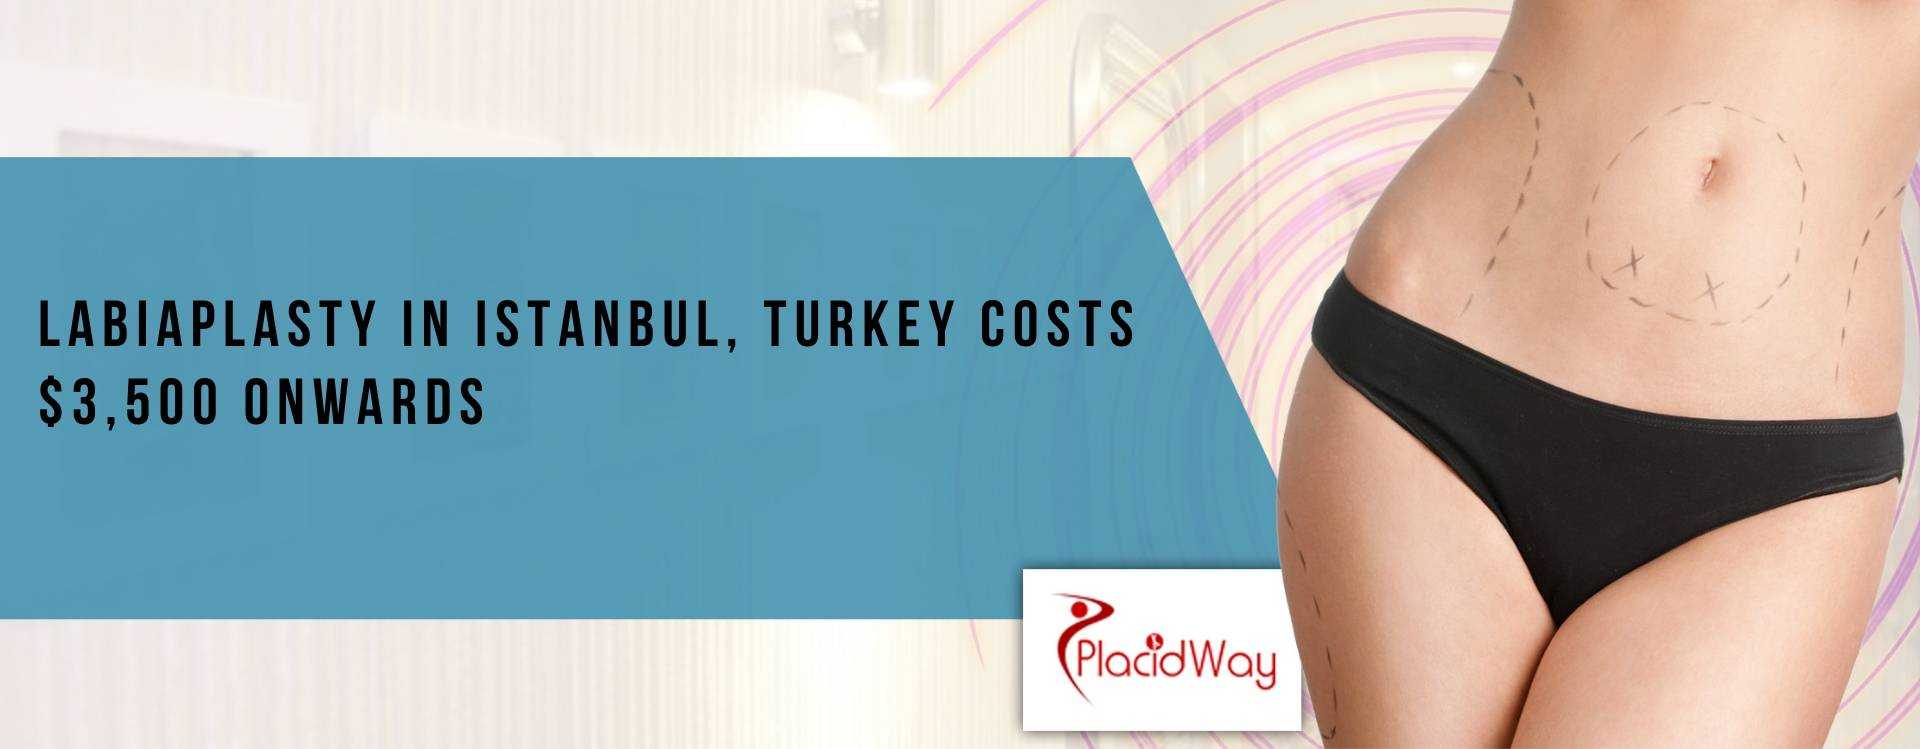 Labiaplasty/vaginal rejuvenation cost in Istanbul, Turkey